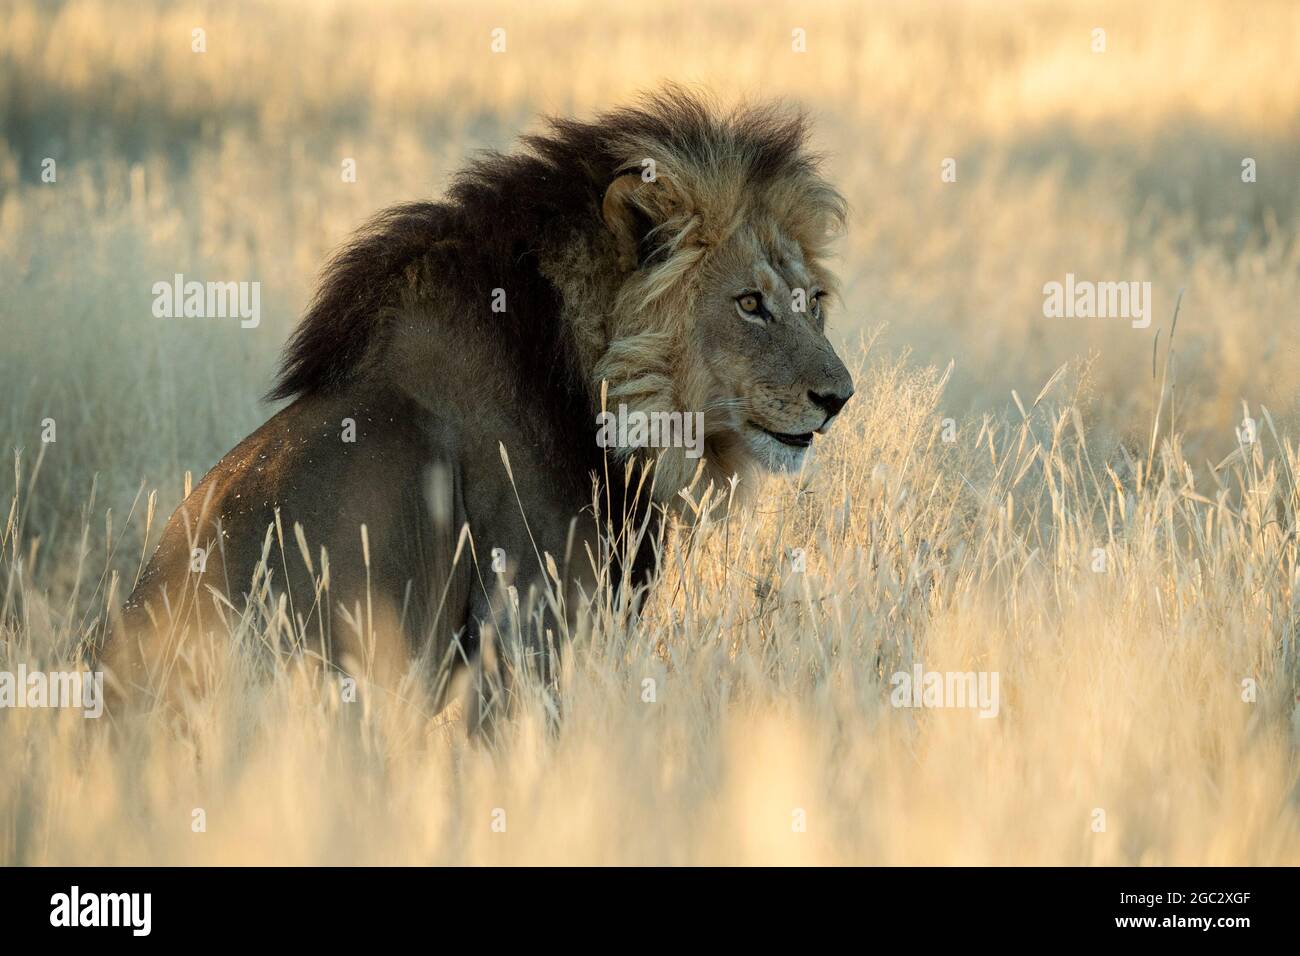 Black-maned kalahari lion, Panthera leo, Kgalagadi Transfrontier Park, South Africa Stock Photo